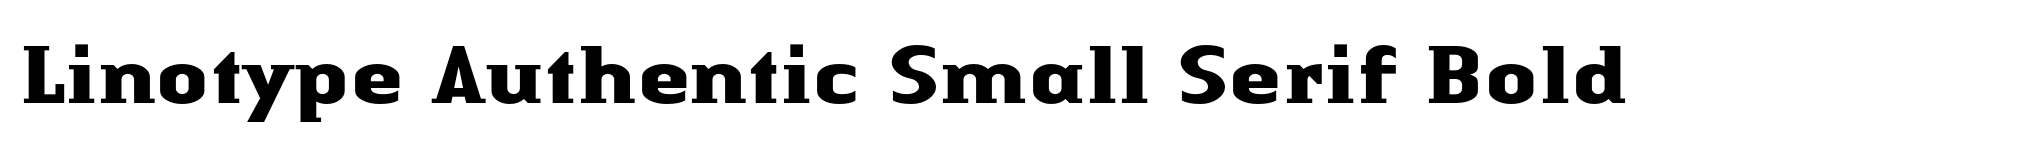 Linotype Authentic Small Serif Bold image